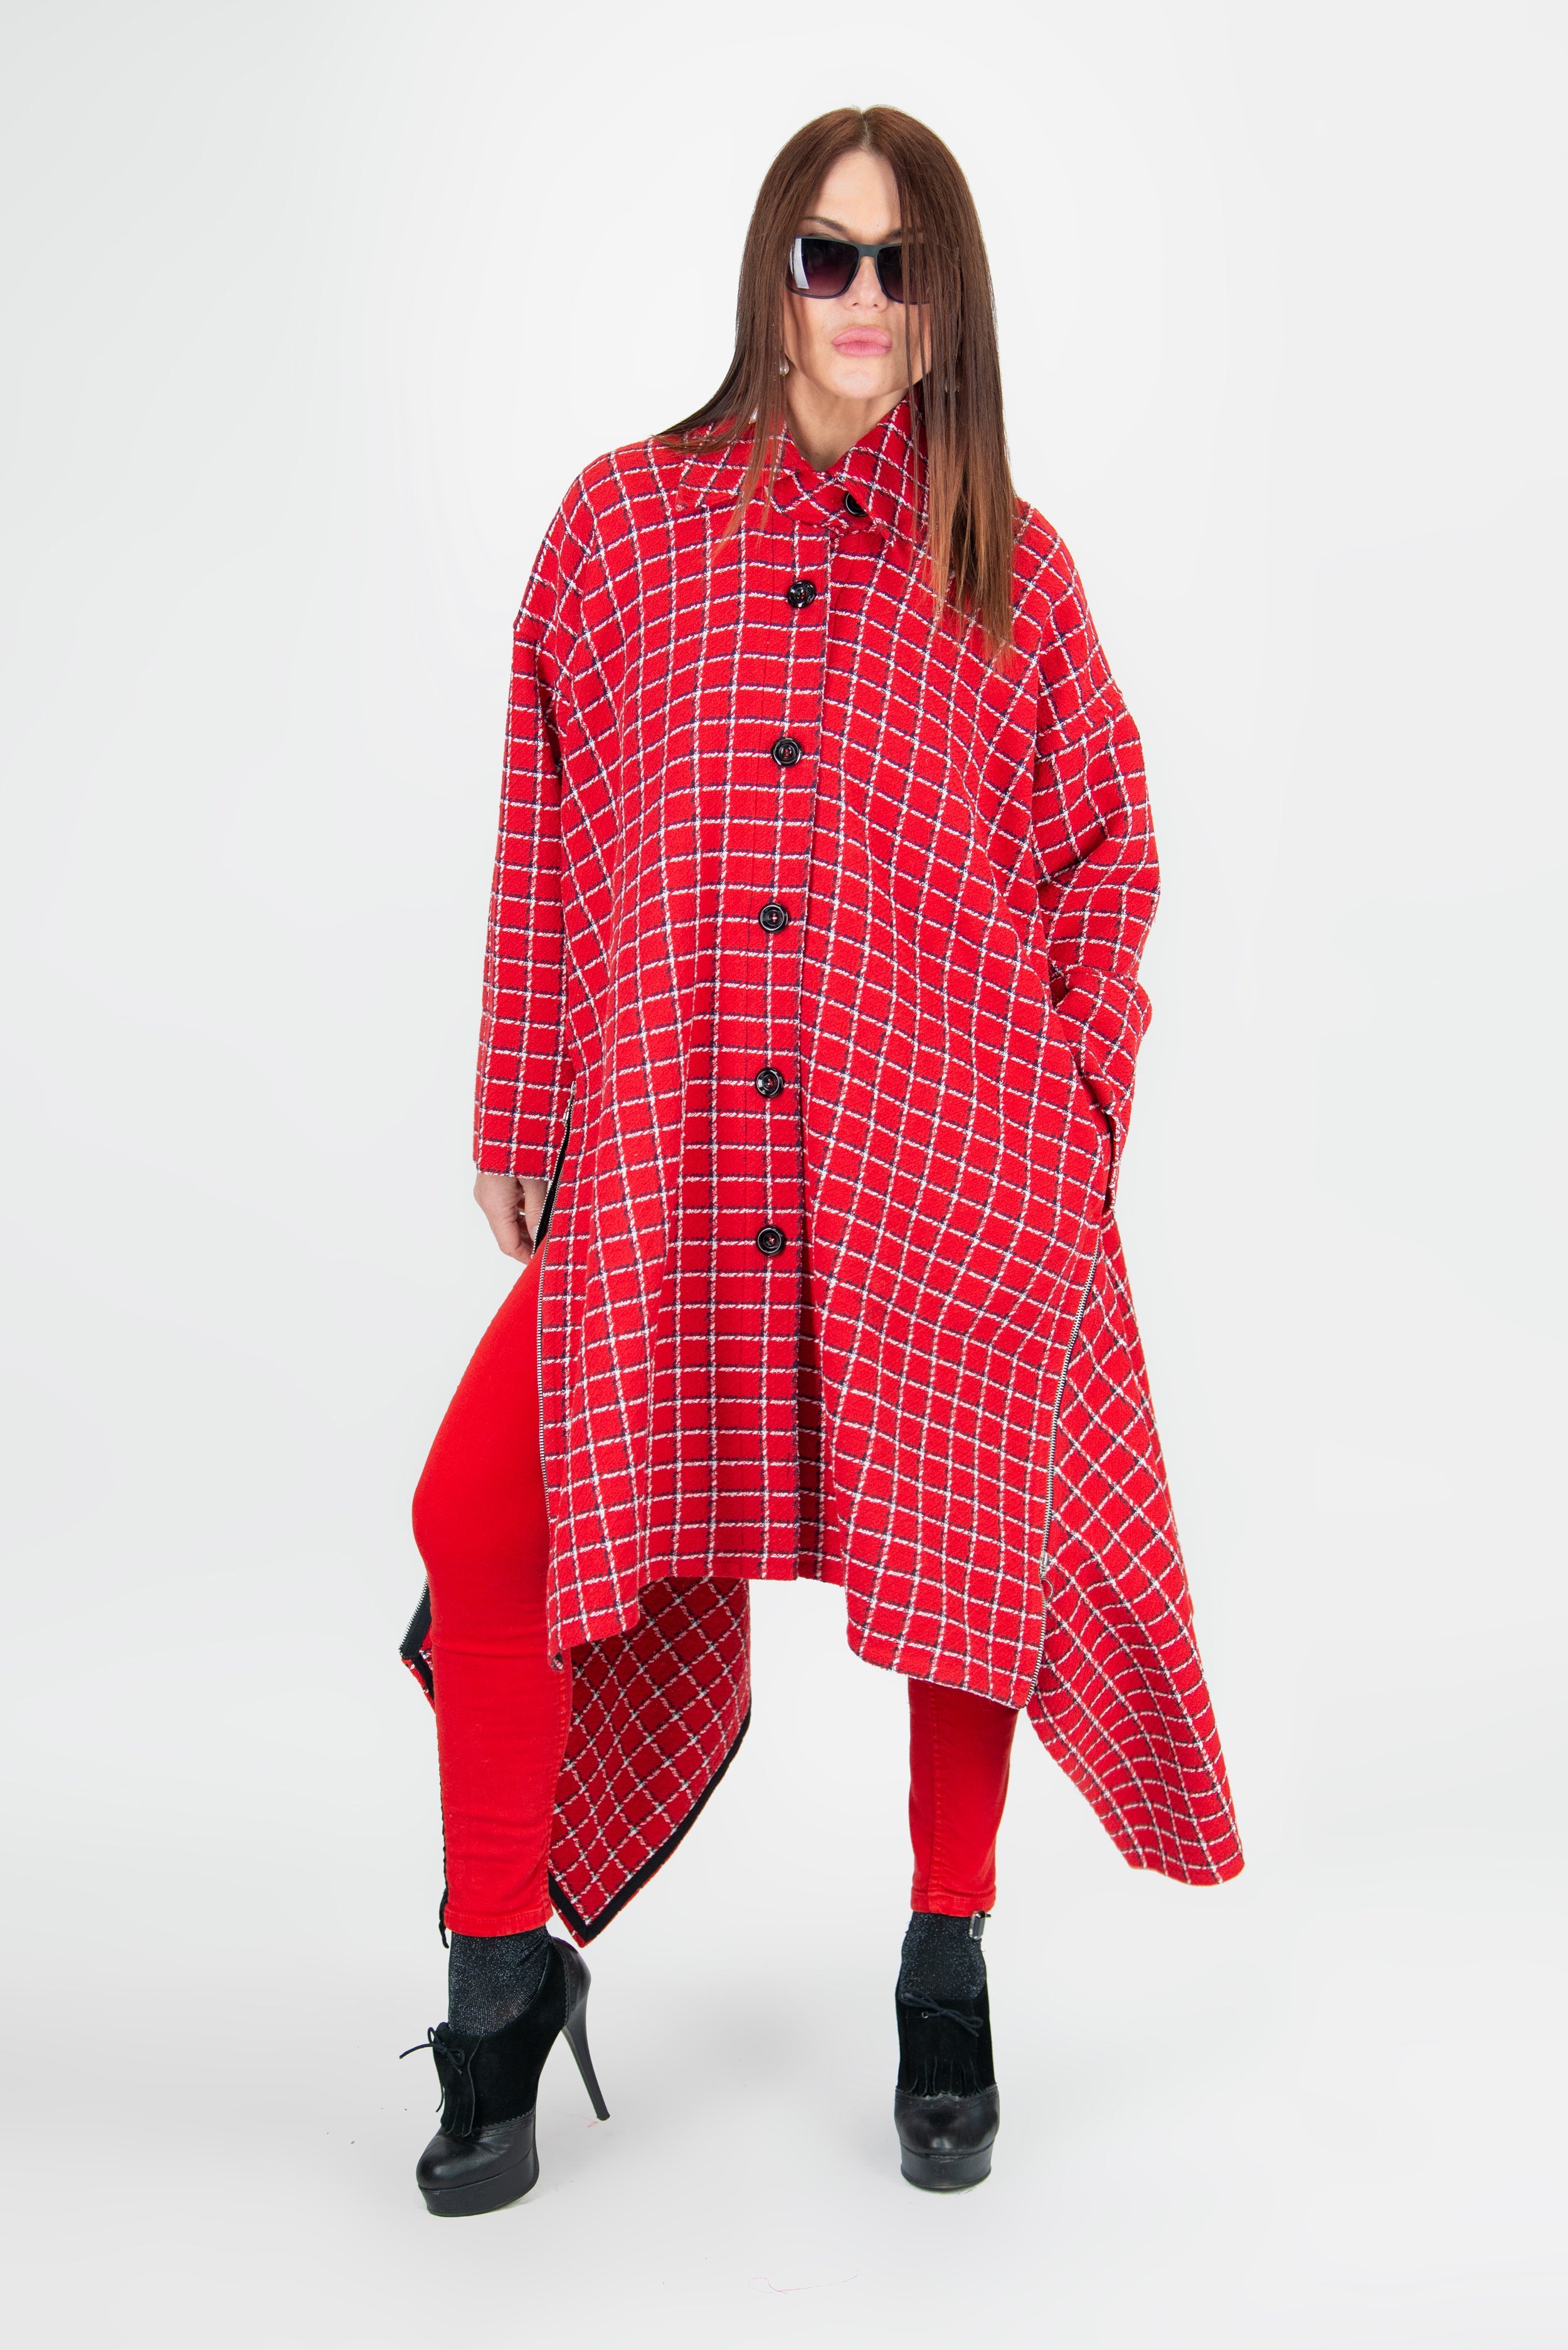 Red Plaid wool Women Coat, Asymmetrical Coat by EUG Fashion